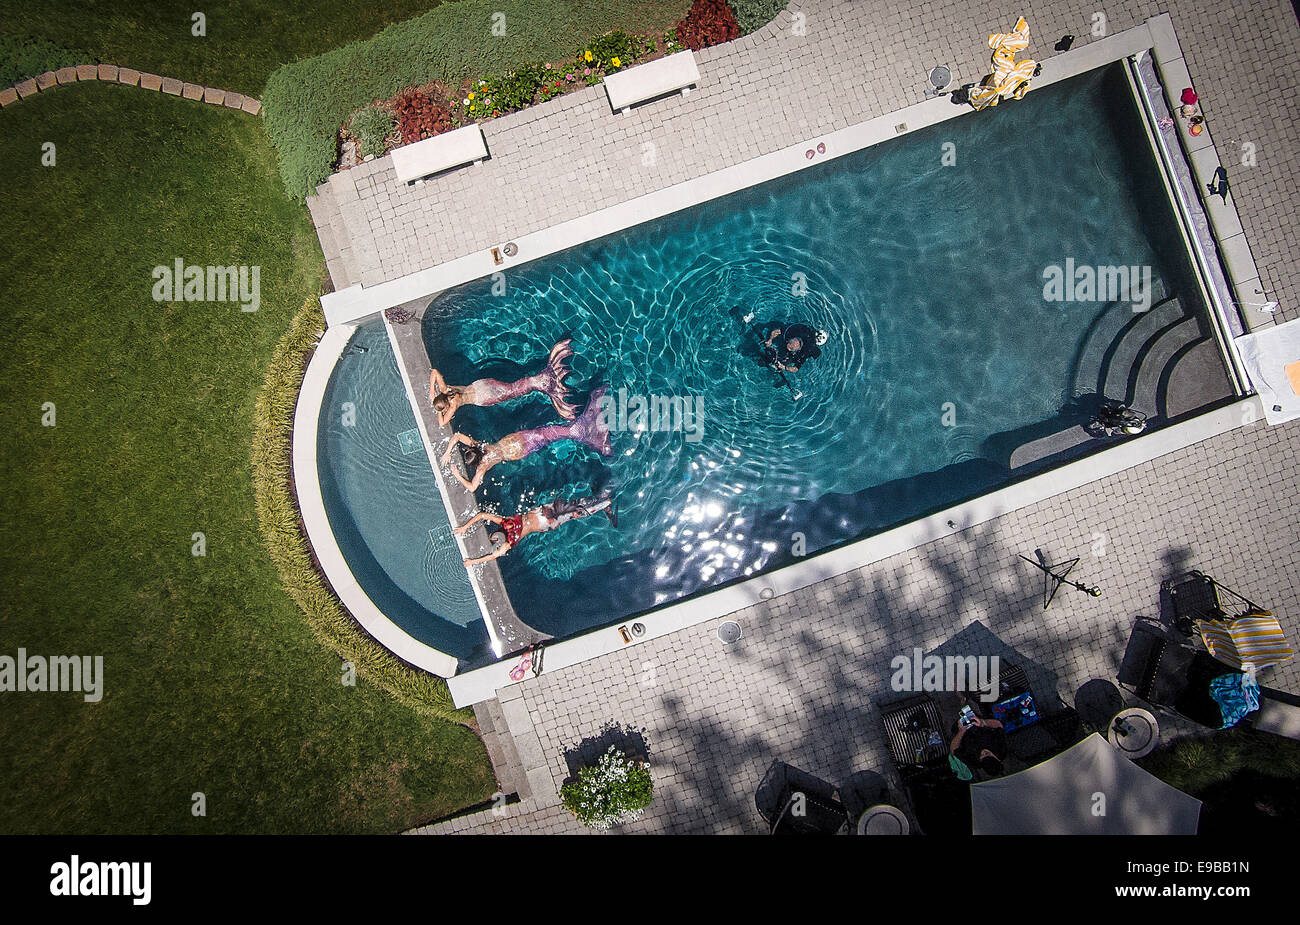 Luftbild-Drohne Foto der drei Meerjungfrauen fotografiert in einem Pool in Virginia Beach, Virginia. Stockfoto